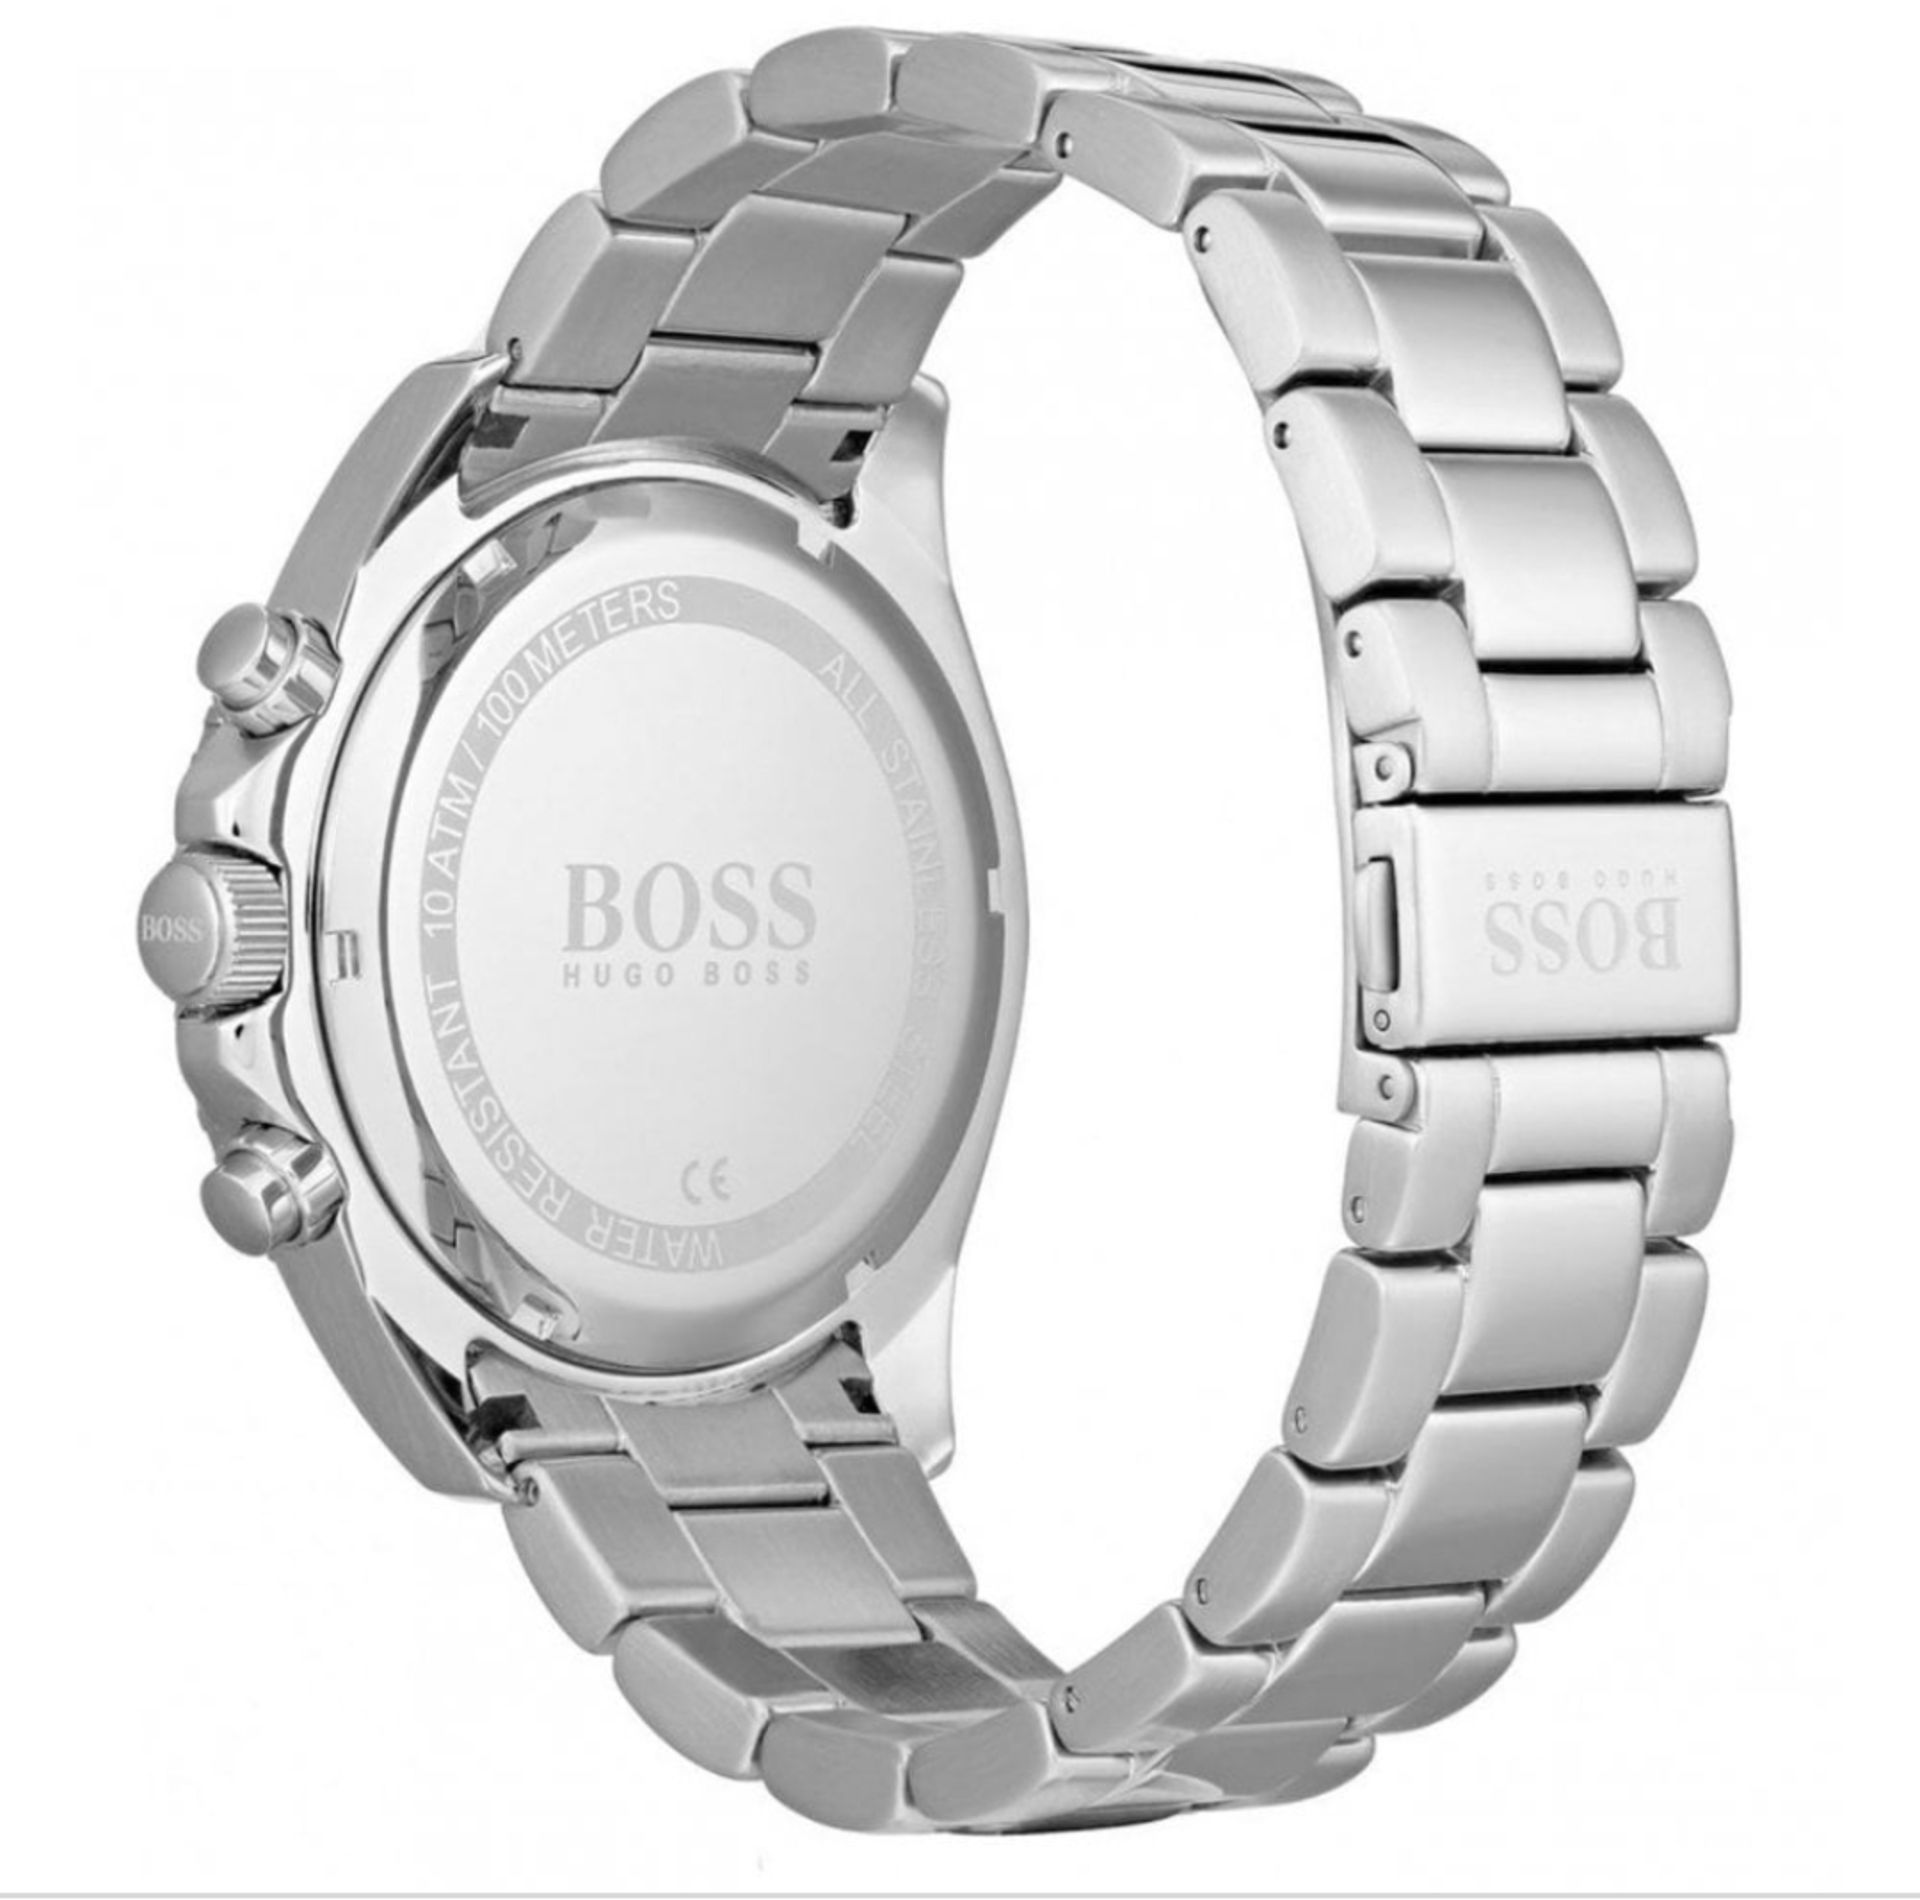 Hugo Boss 1513704 Men's Ocean Edition Blue Dial Silver Bracelet Chronograph Watch - Image 5 of 7